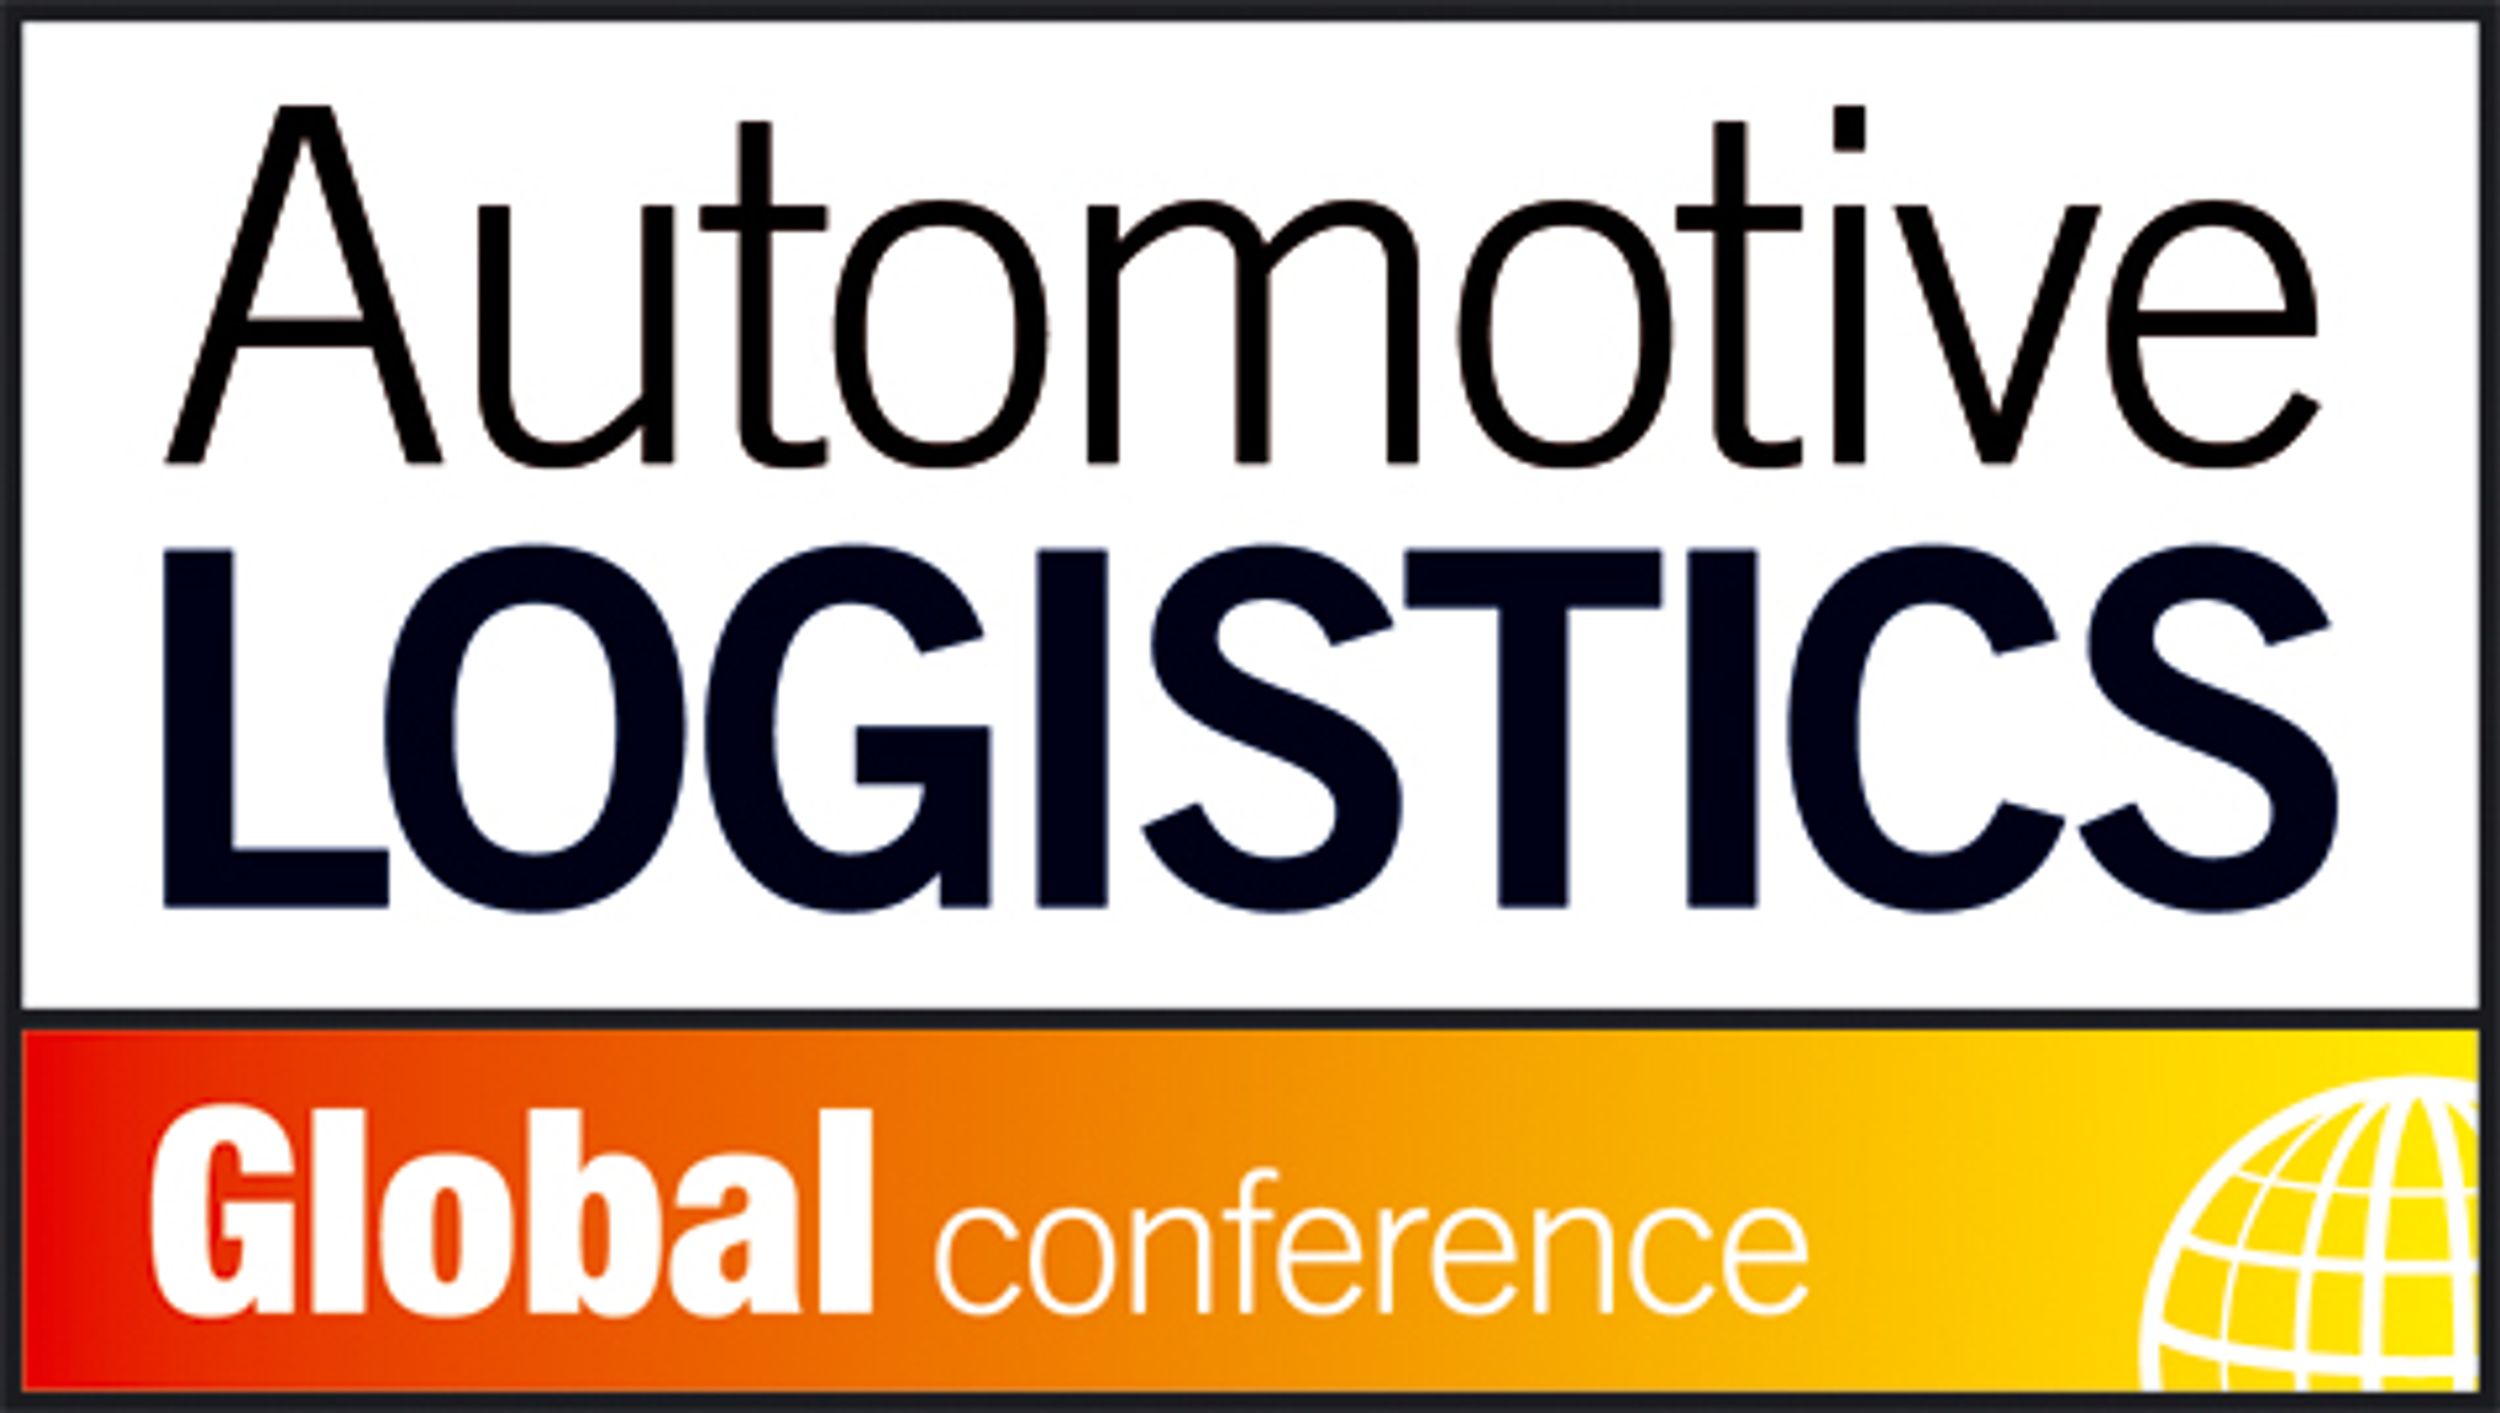 Conference Highlights Automotive Logistics Trends